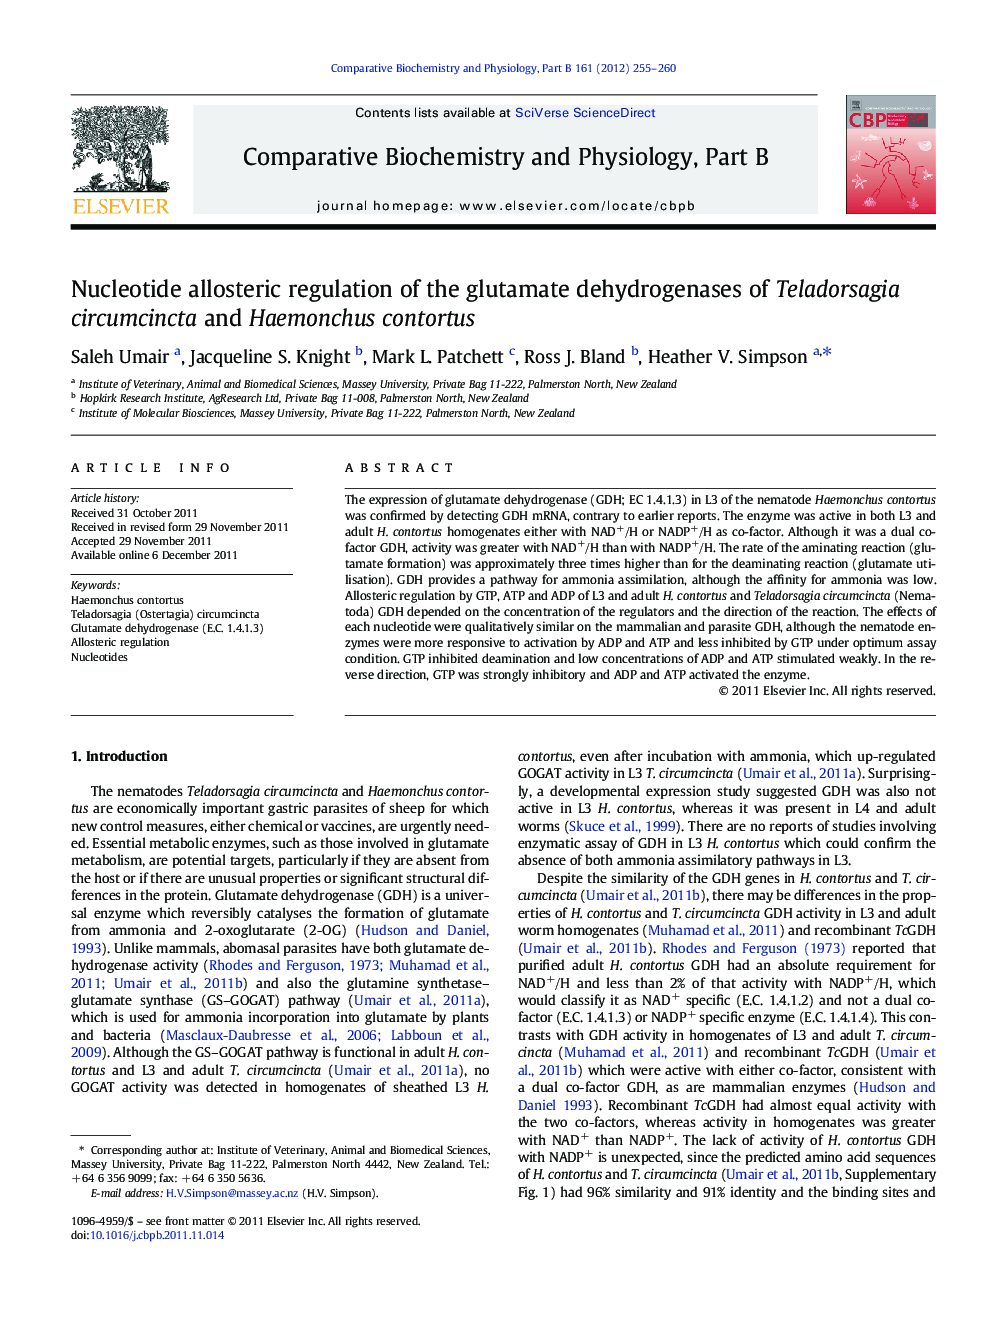 Nucleotide allosteric regulation of the glutamate dehydrogenases of Teladorsagia circumcincta and Haemonchus contortus